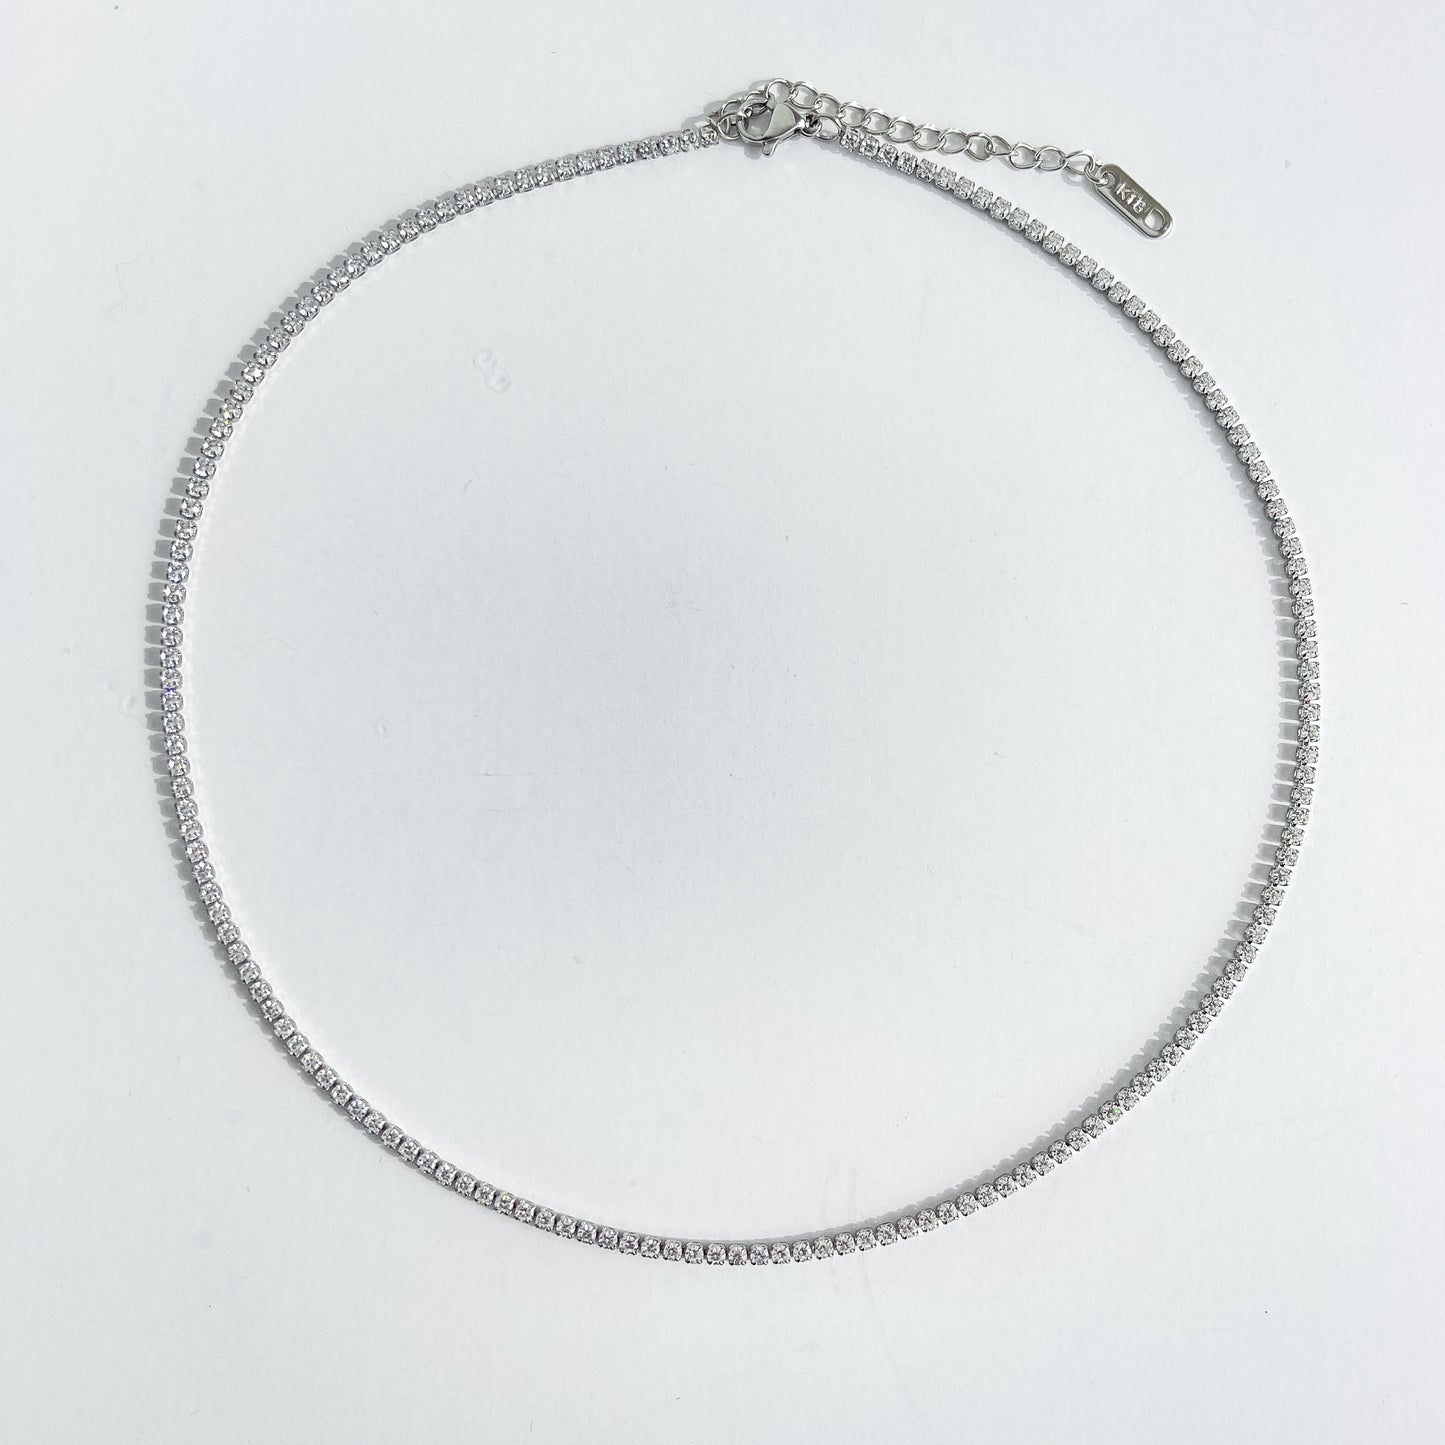 Delicate Diamond Tennis Necklace - Silver